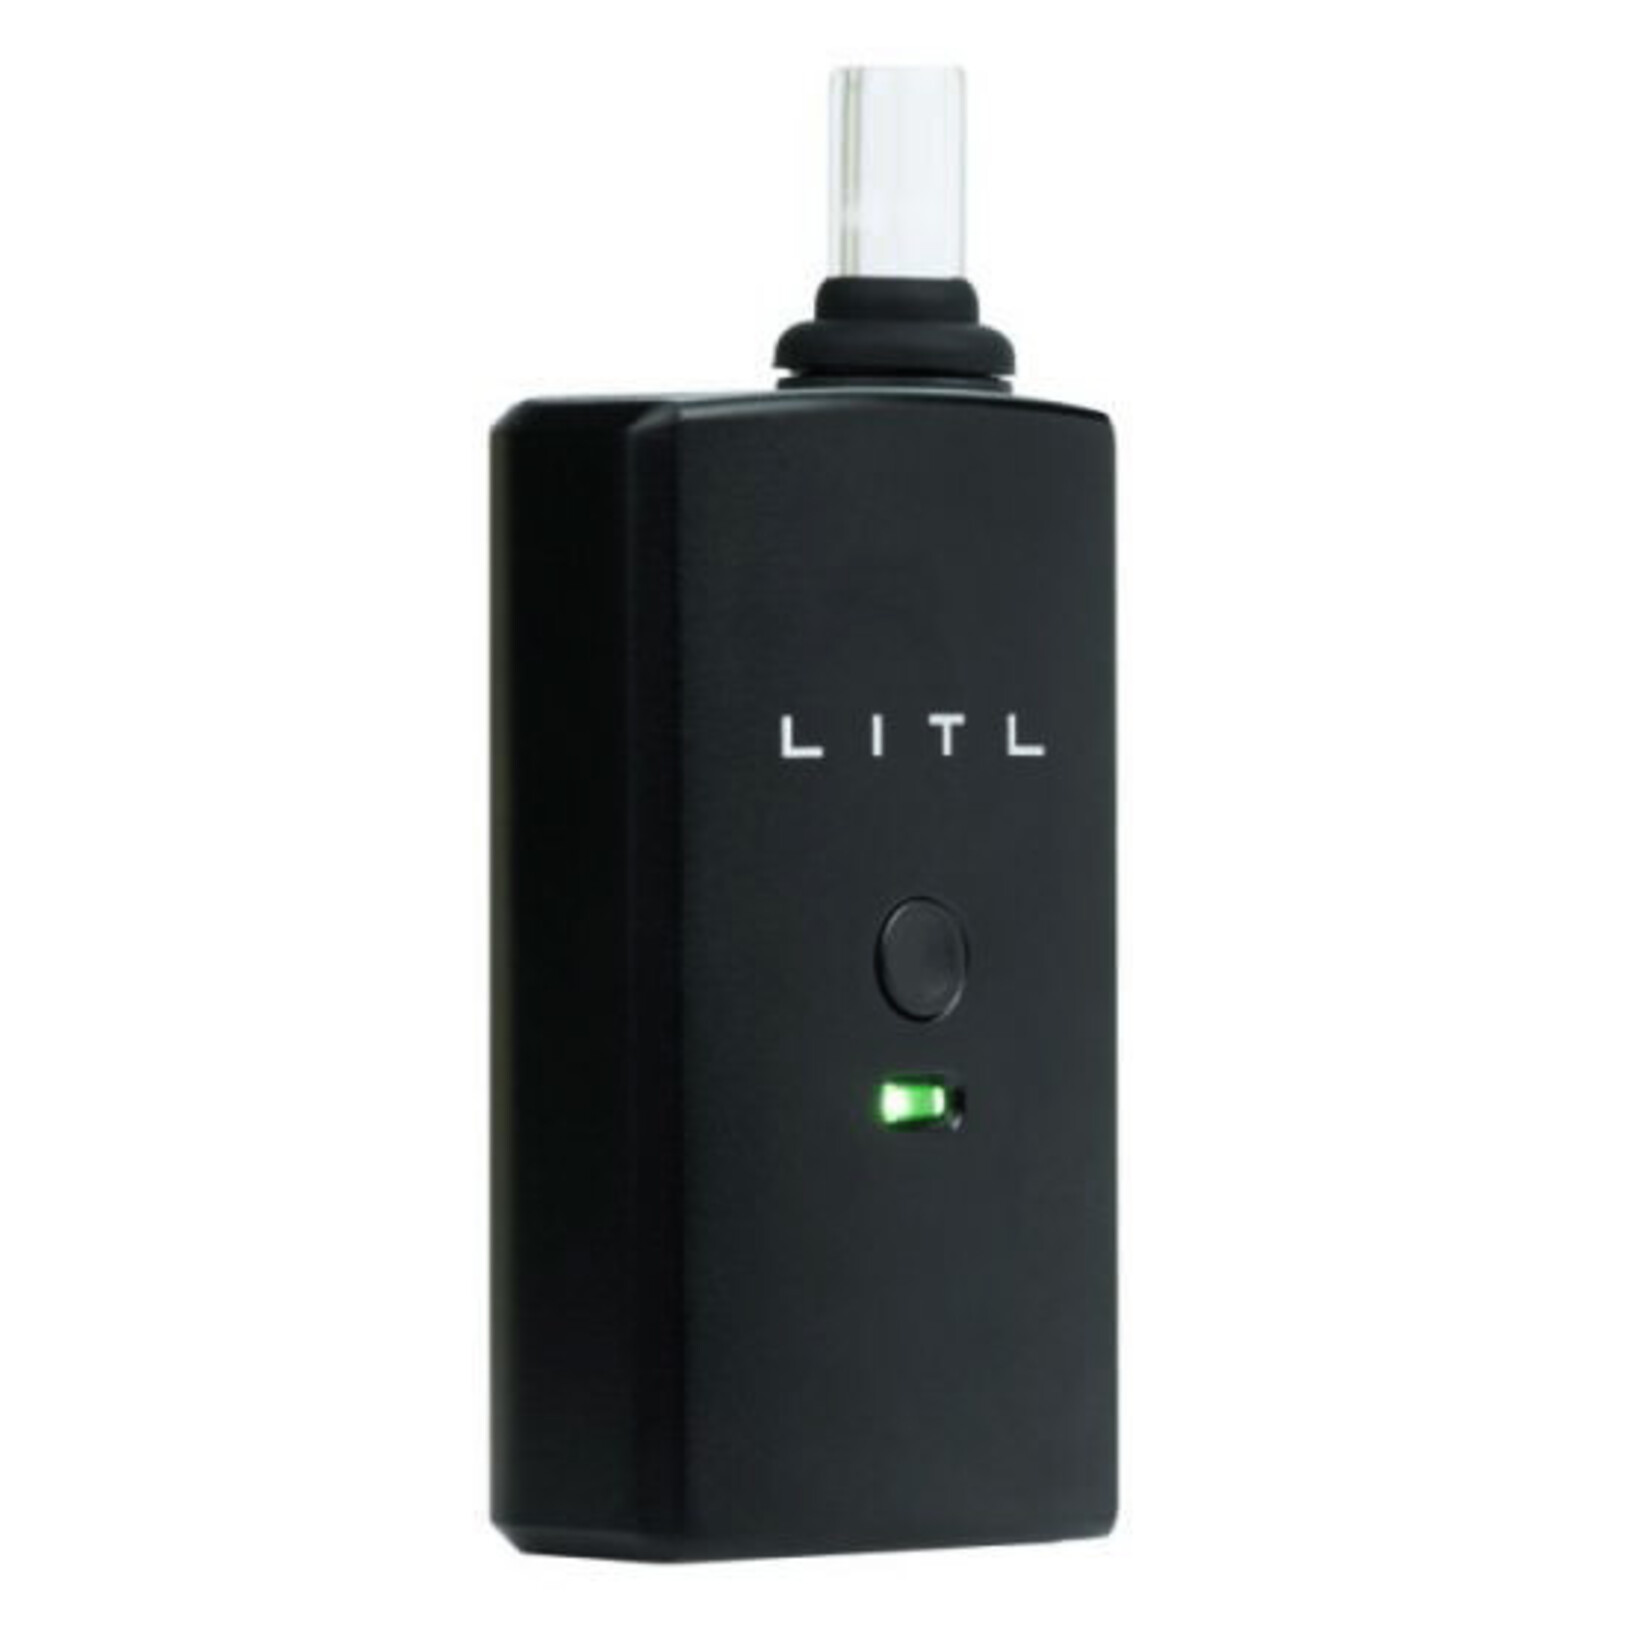 LITL 1 LITL 1 Dry Vaporizer